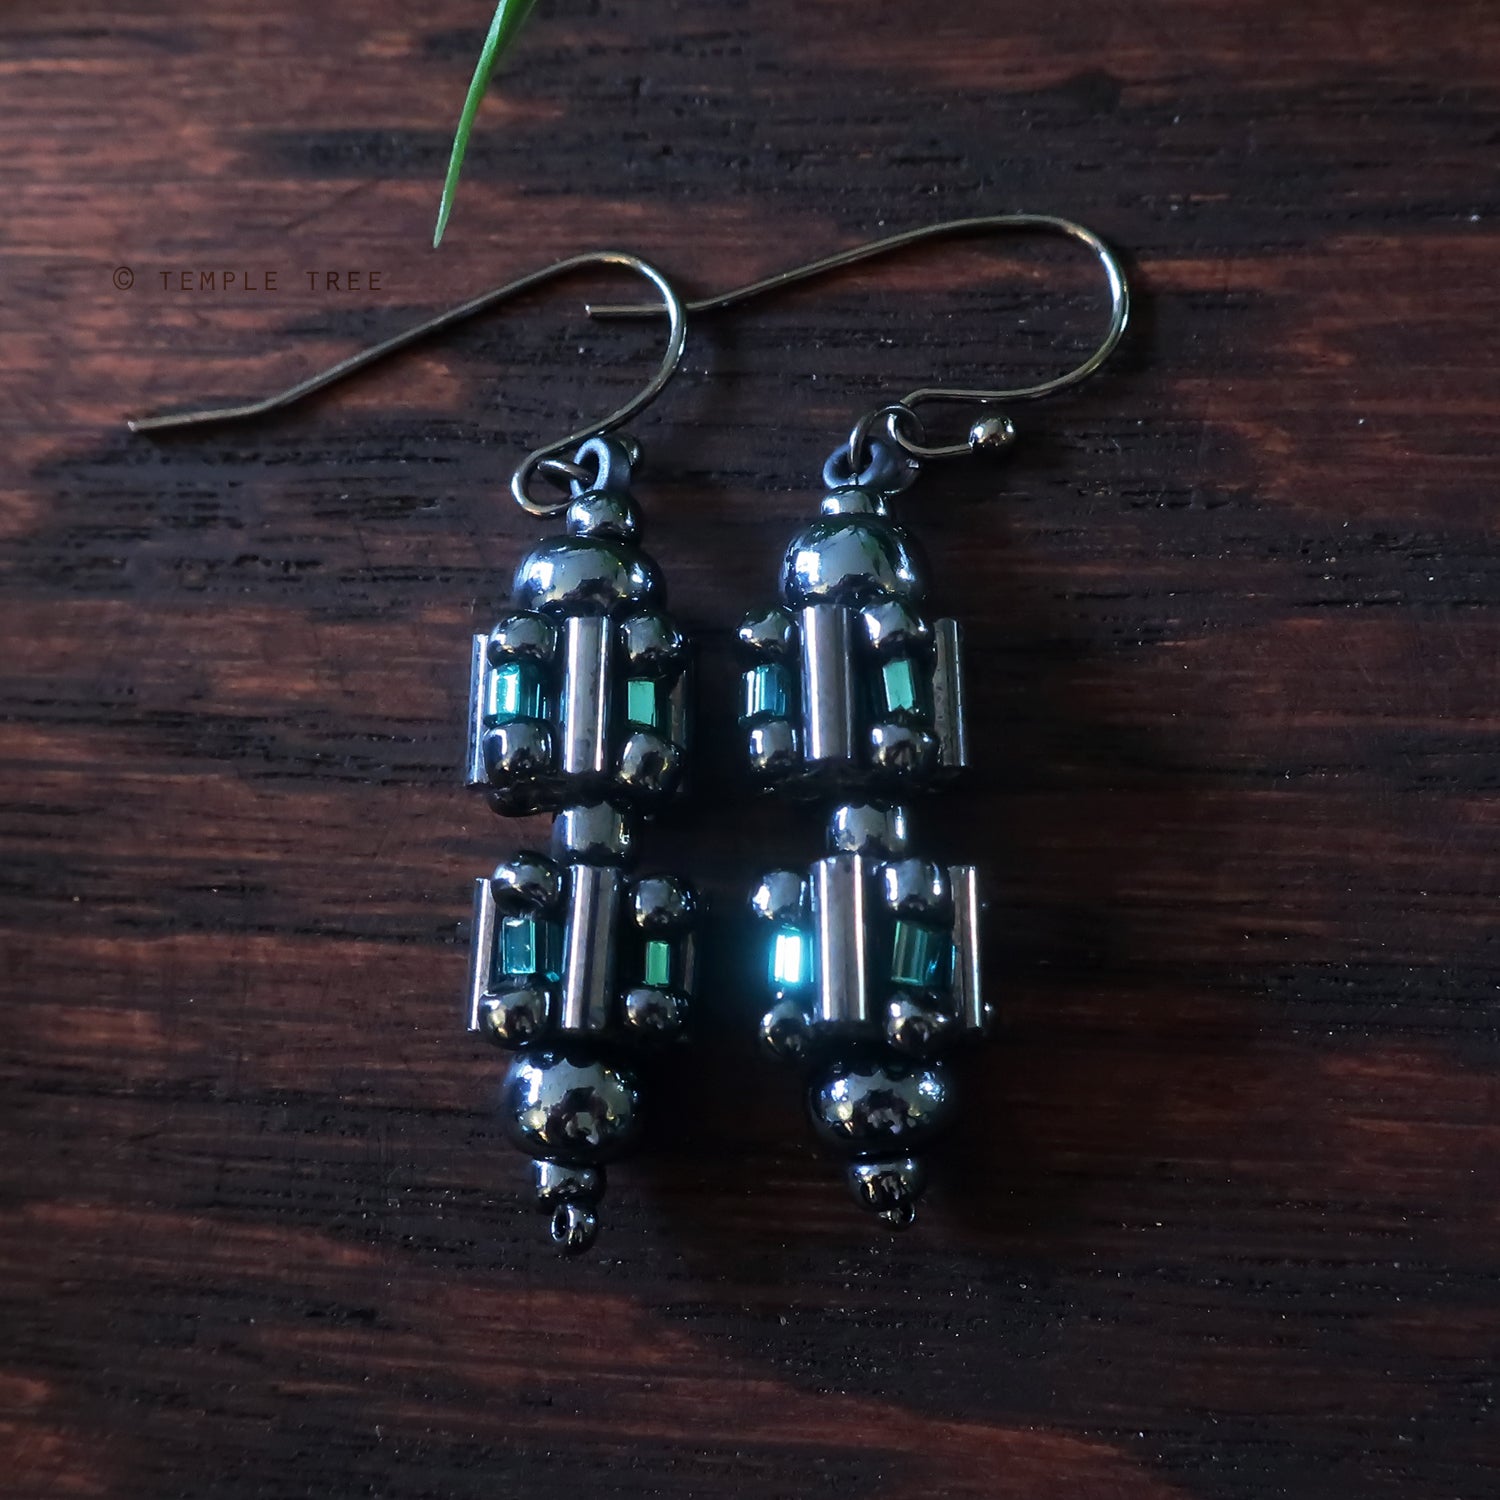 Circuit Breaker - Ancient Fuse Box Earrings by Temple Tree - Grey